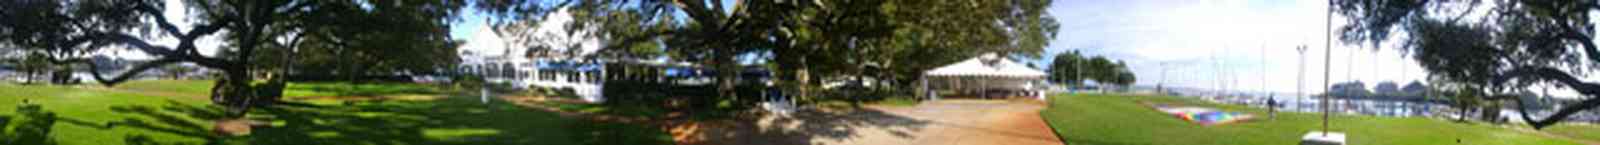 Sanders-Beach:-Pensacola-Yacht-Club_09.jpg:  oak tree, sail boat, awning, 